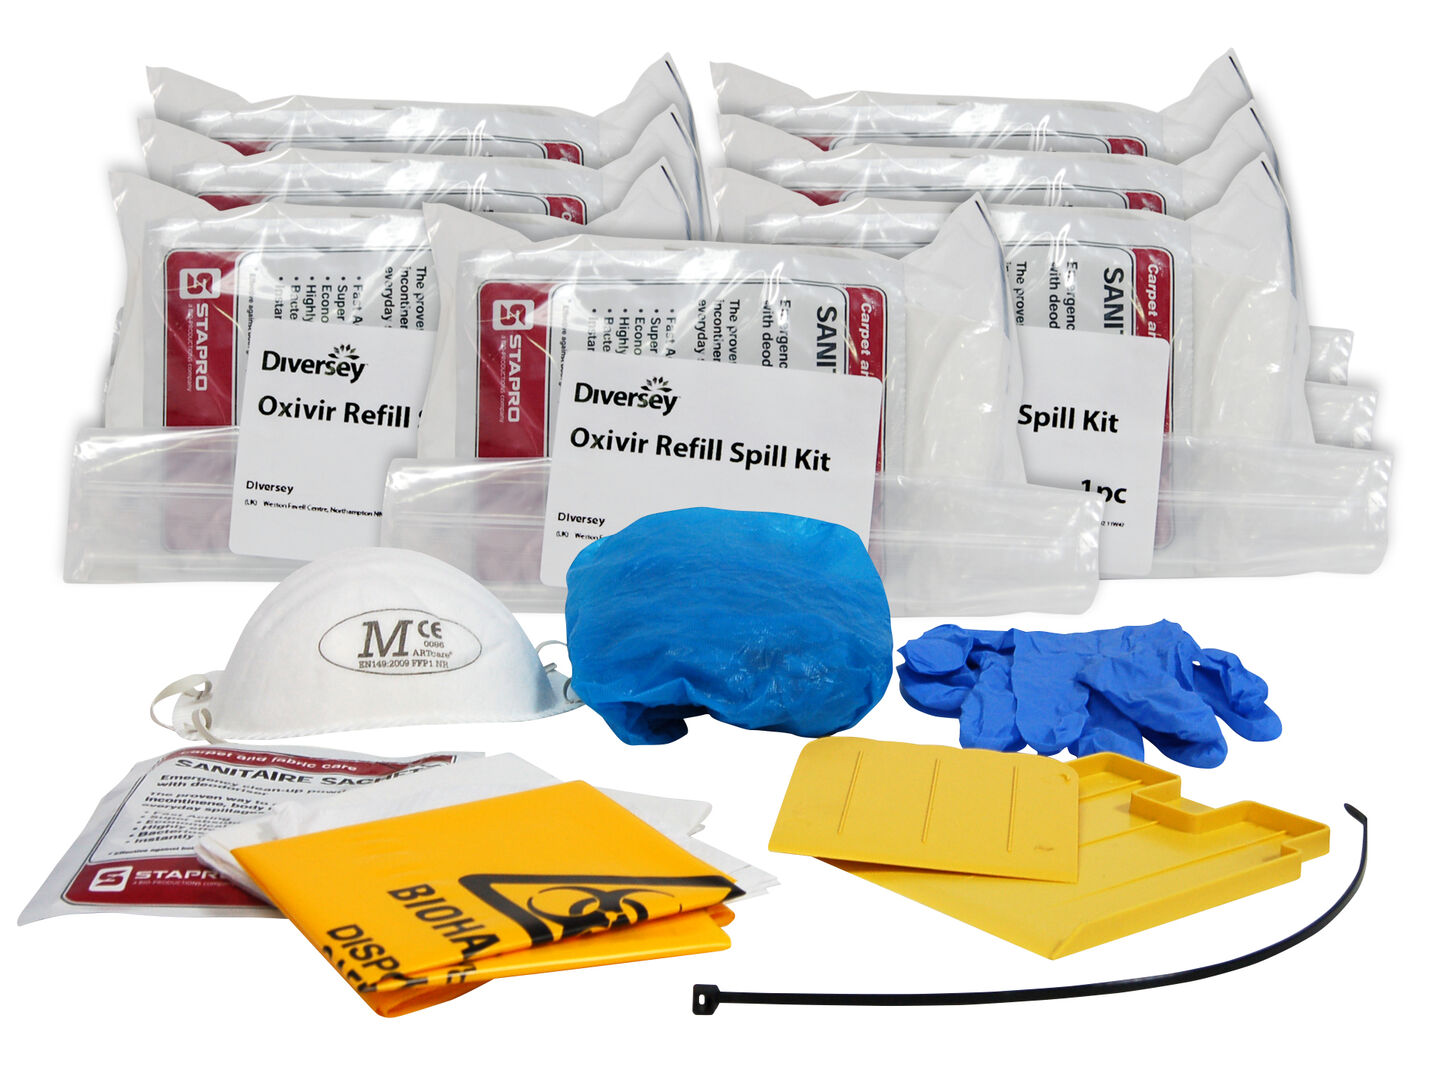 Oxivir Refill Spill Kit